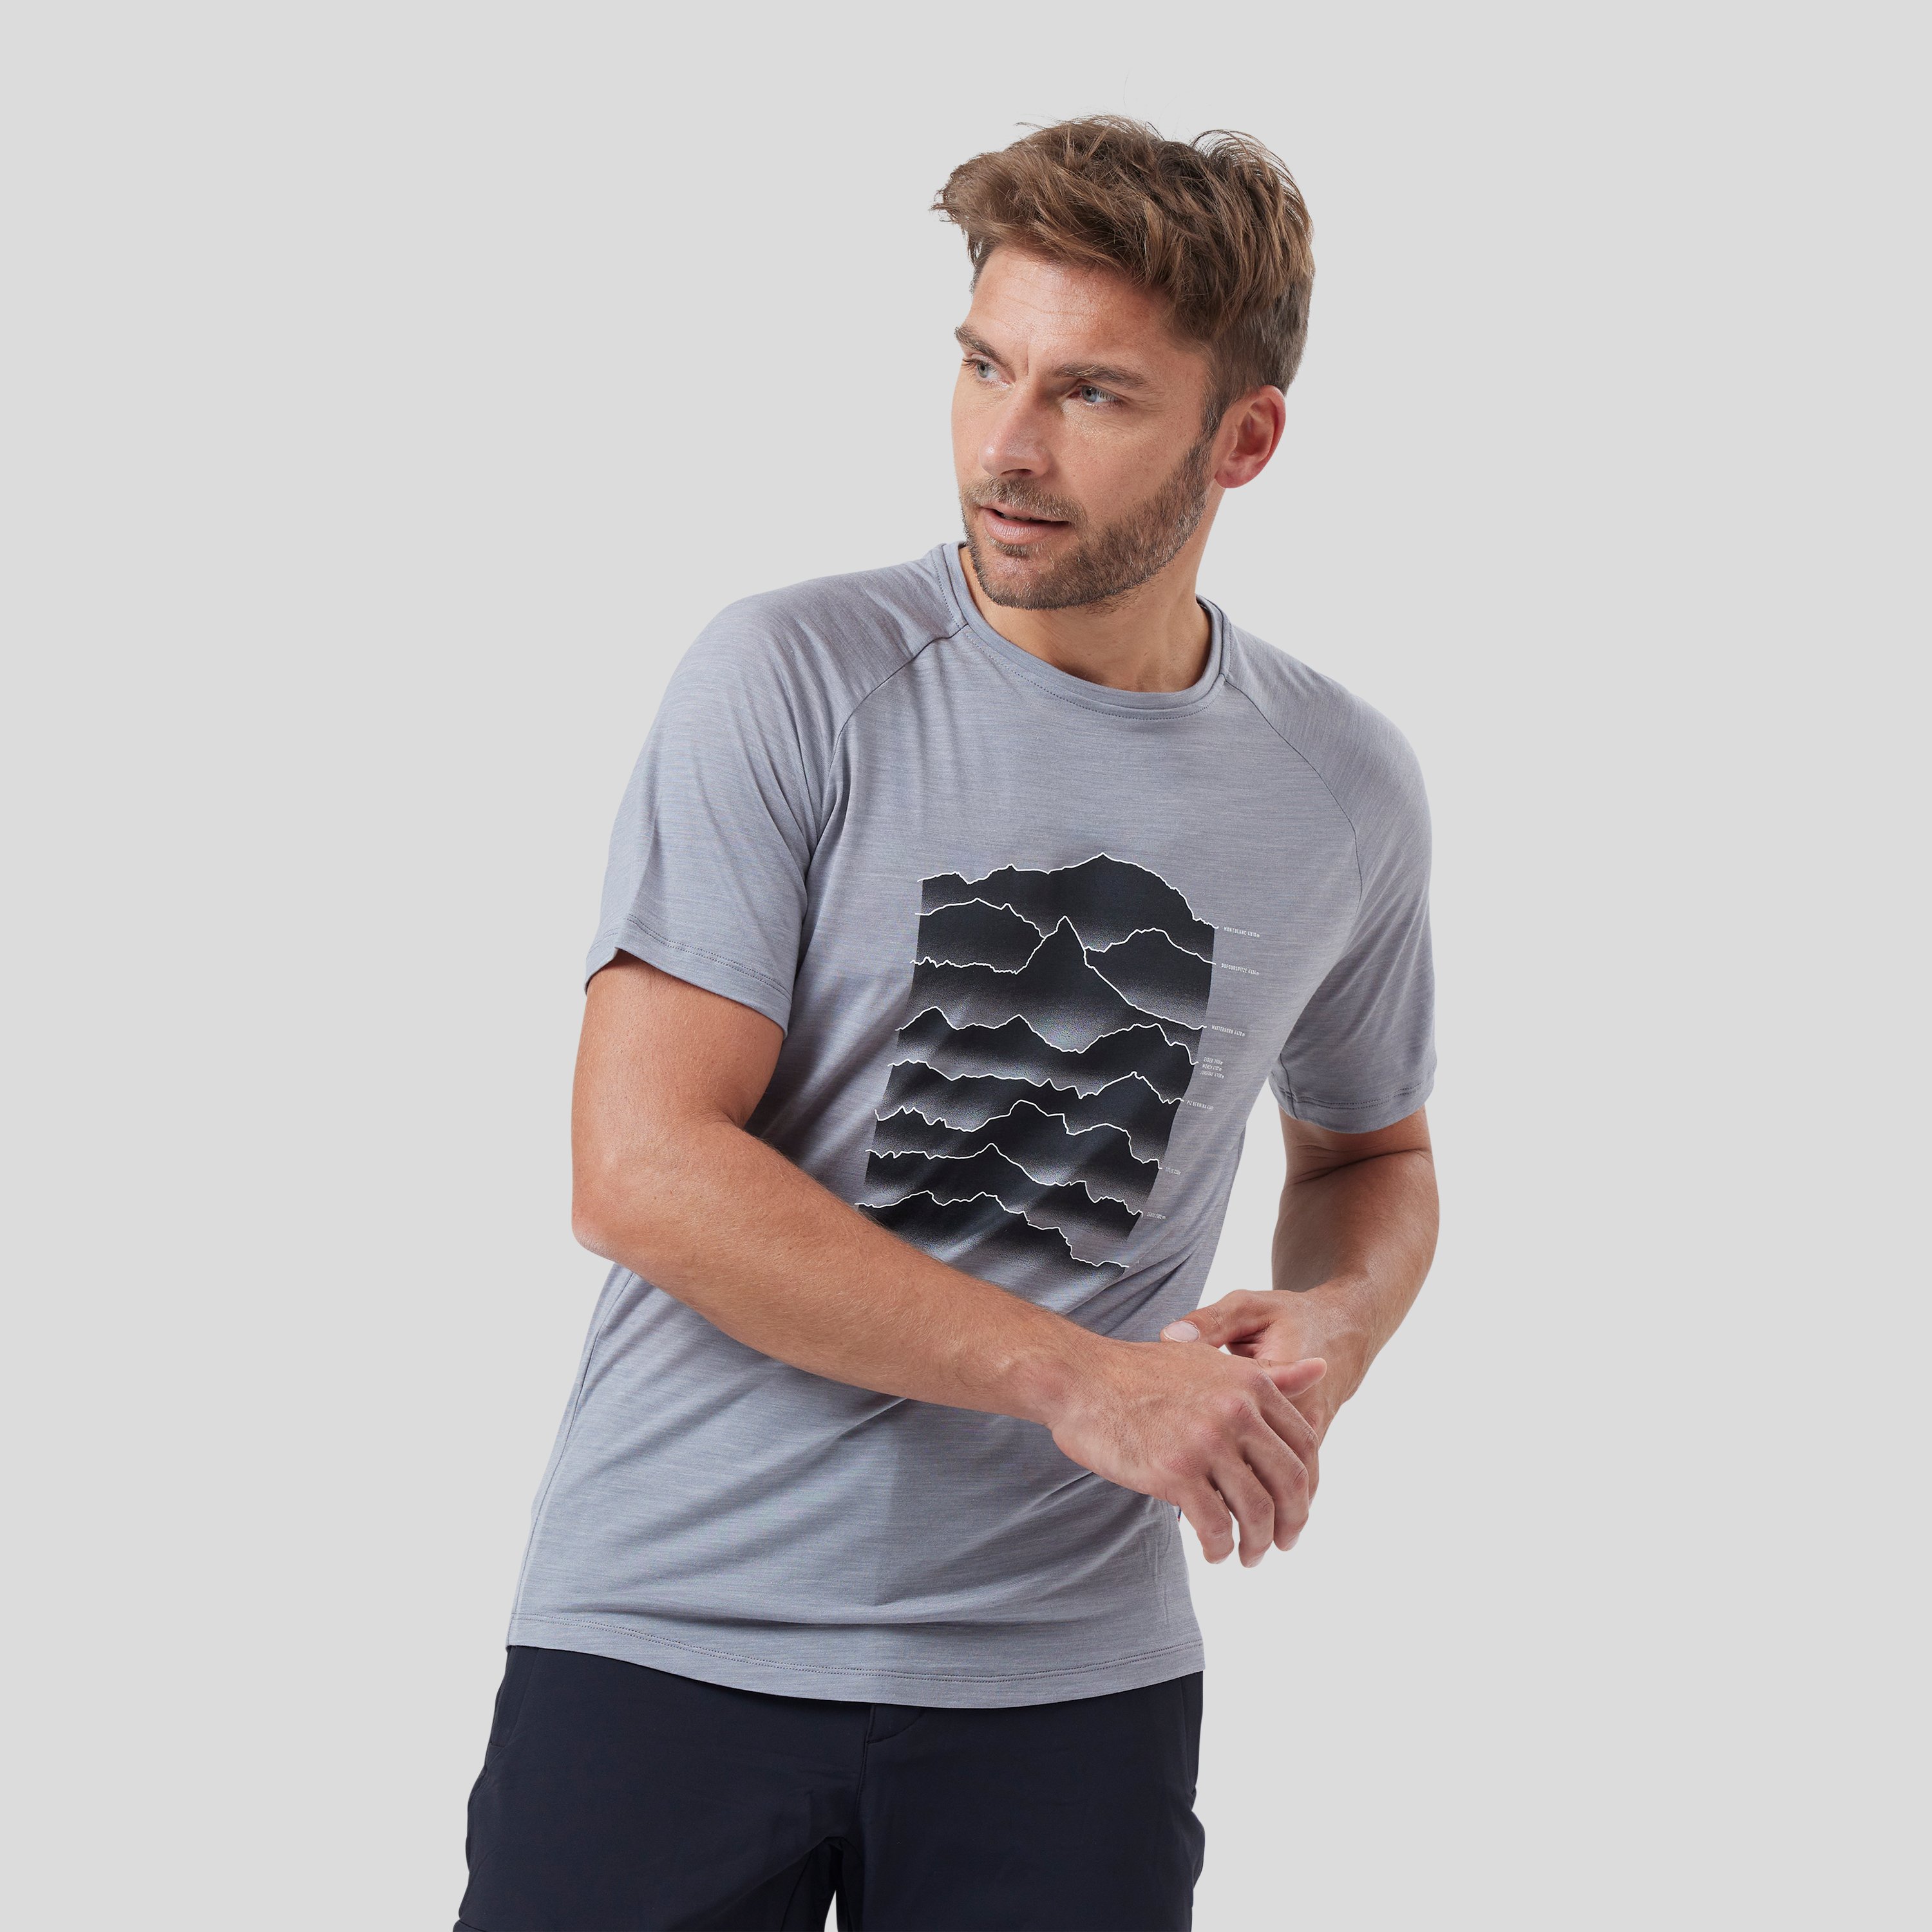 ODLO Ascent Performance Wool Light T-Shirt mit Sonnenaufgangsmotiv für Herren, S, grau